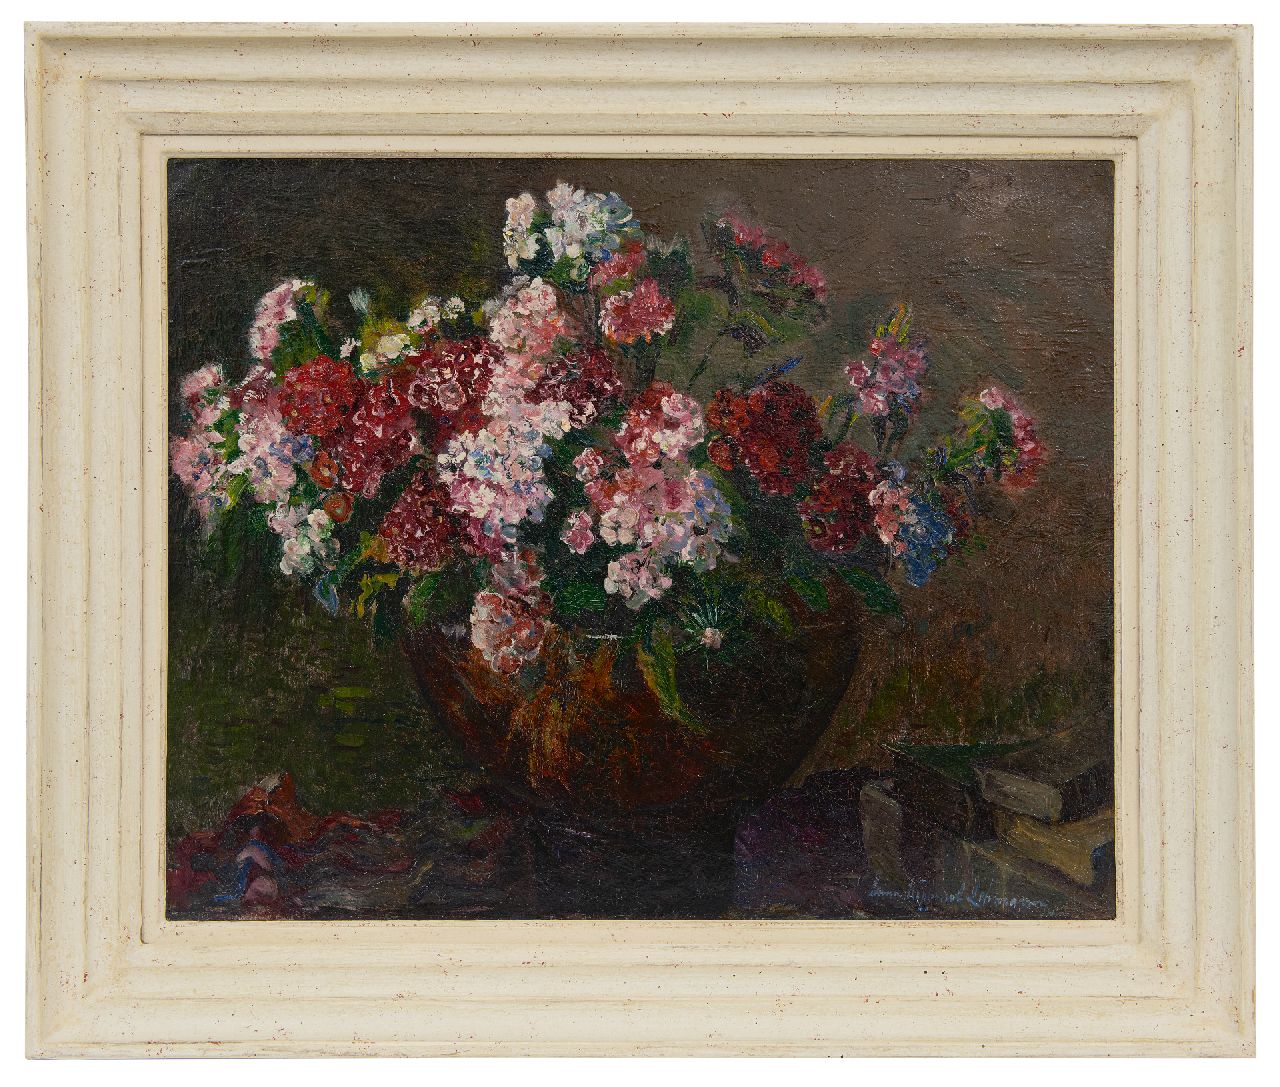 Lehmann A.E.F.  | 'Anna' Elisabeth Frederika Lehmann | Paintings offered for sale | Sweet Williams, oil on canvas 40.5 x 50.5 cm, signed l.r.